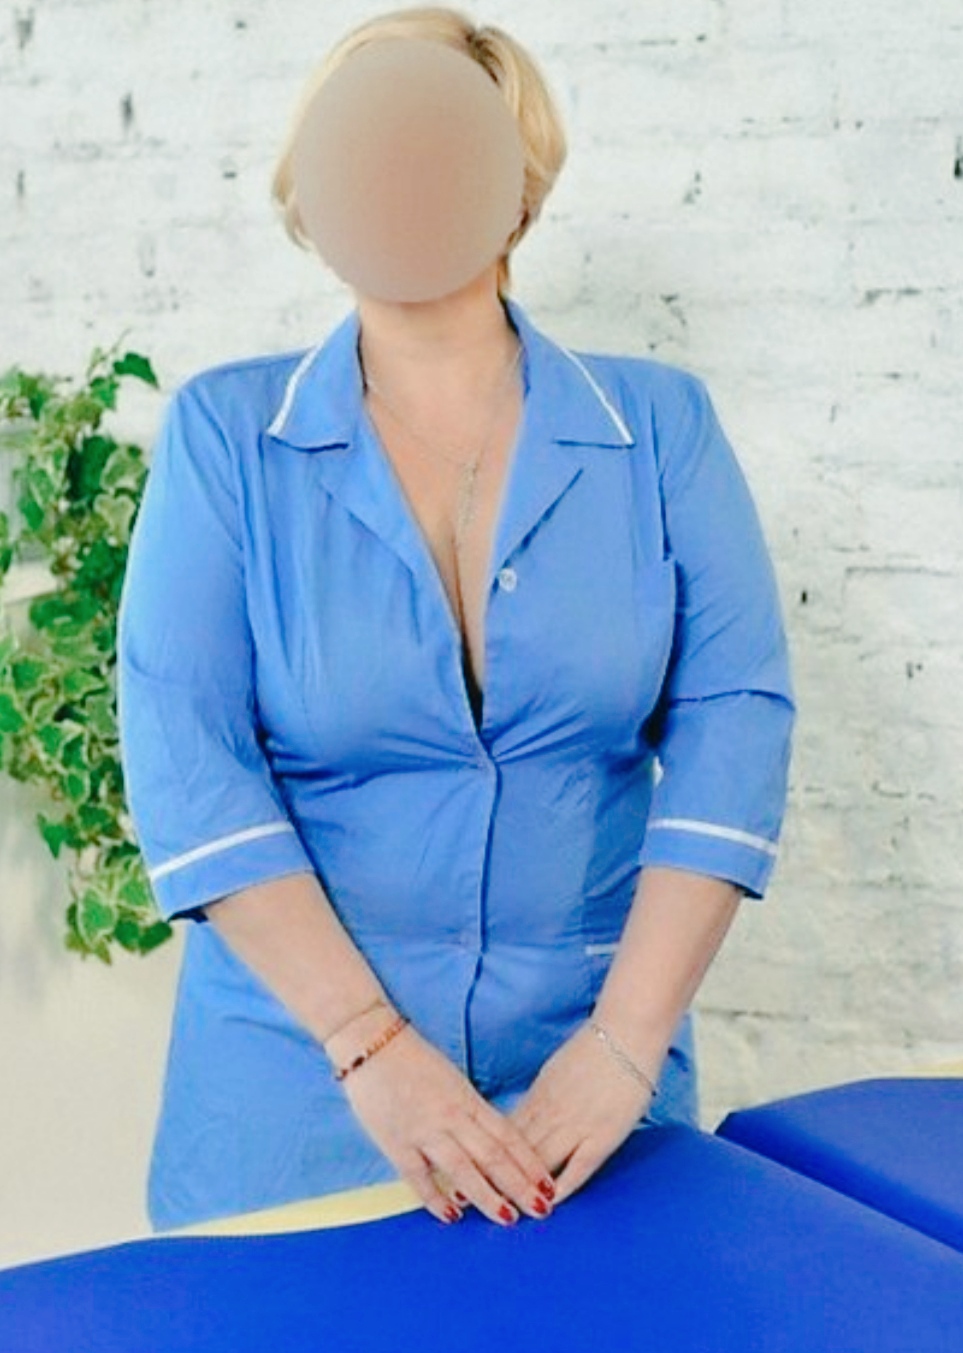 Индивидуалка ВЕРА "VIP МАССАЖ" с 5 размером груди исполнит классический секс и позовет в гости в Ленинградский